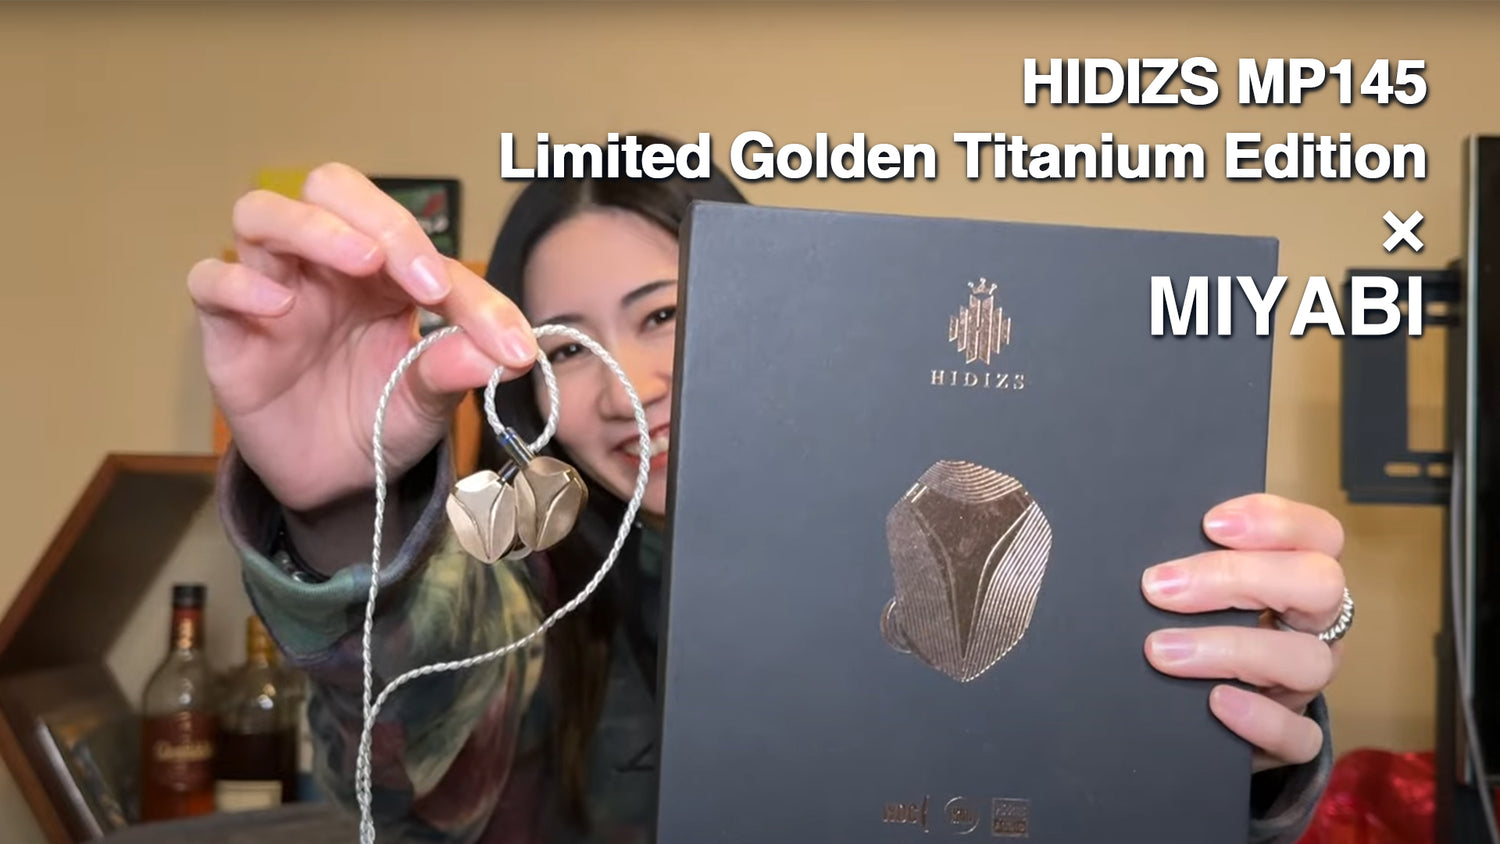 HIDIZS MP145 Limited Golden Titanium Edition Review - MIYABI